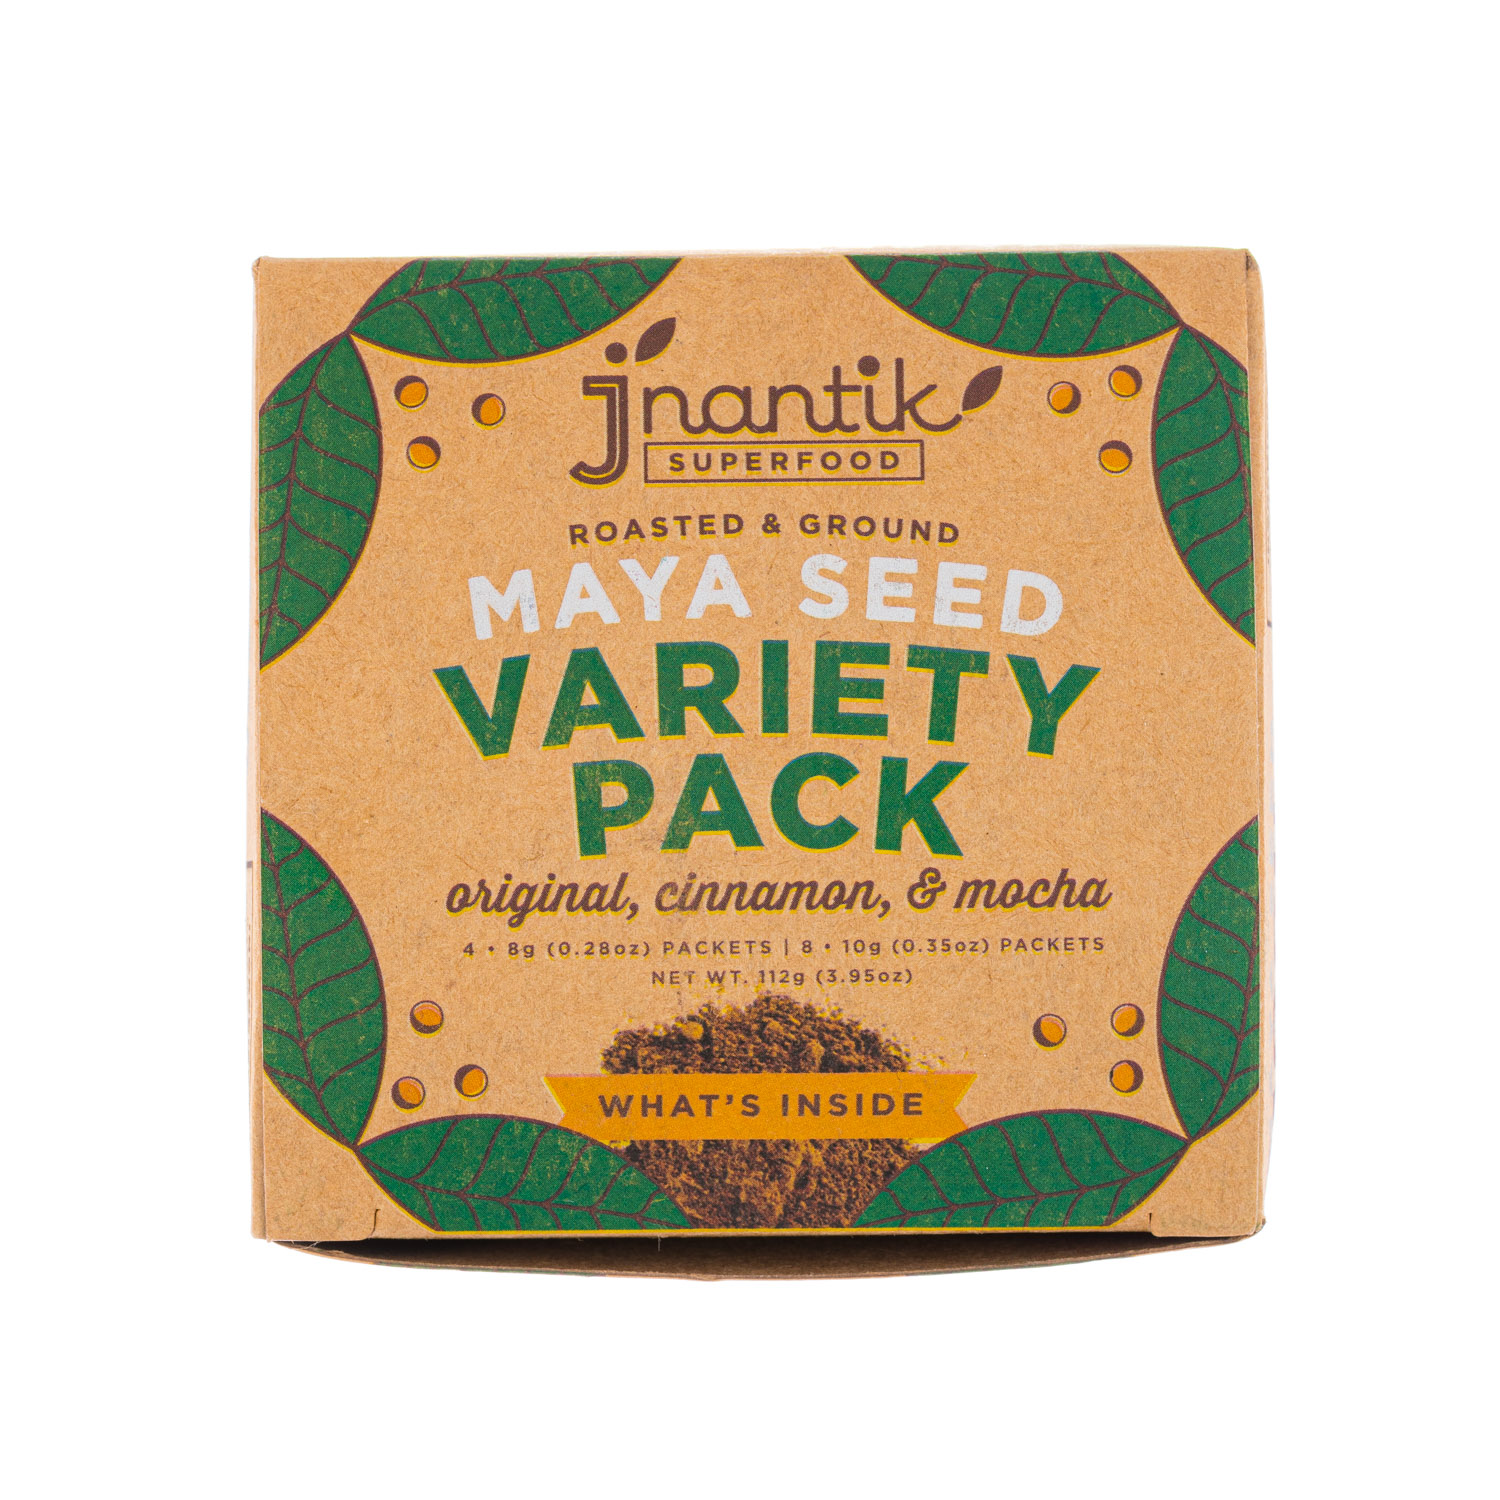 Maya Seed Variety Pack